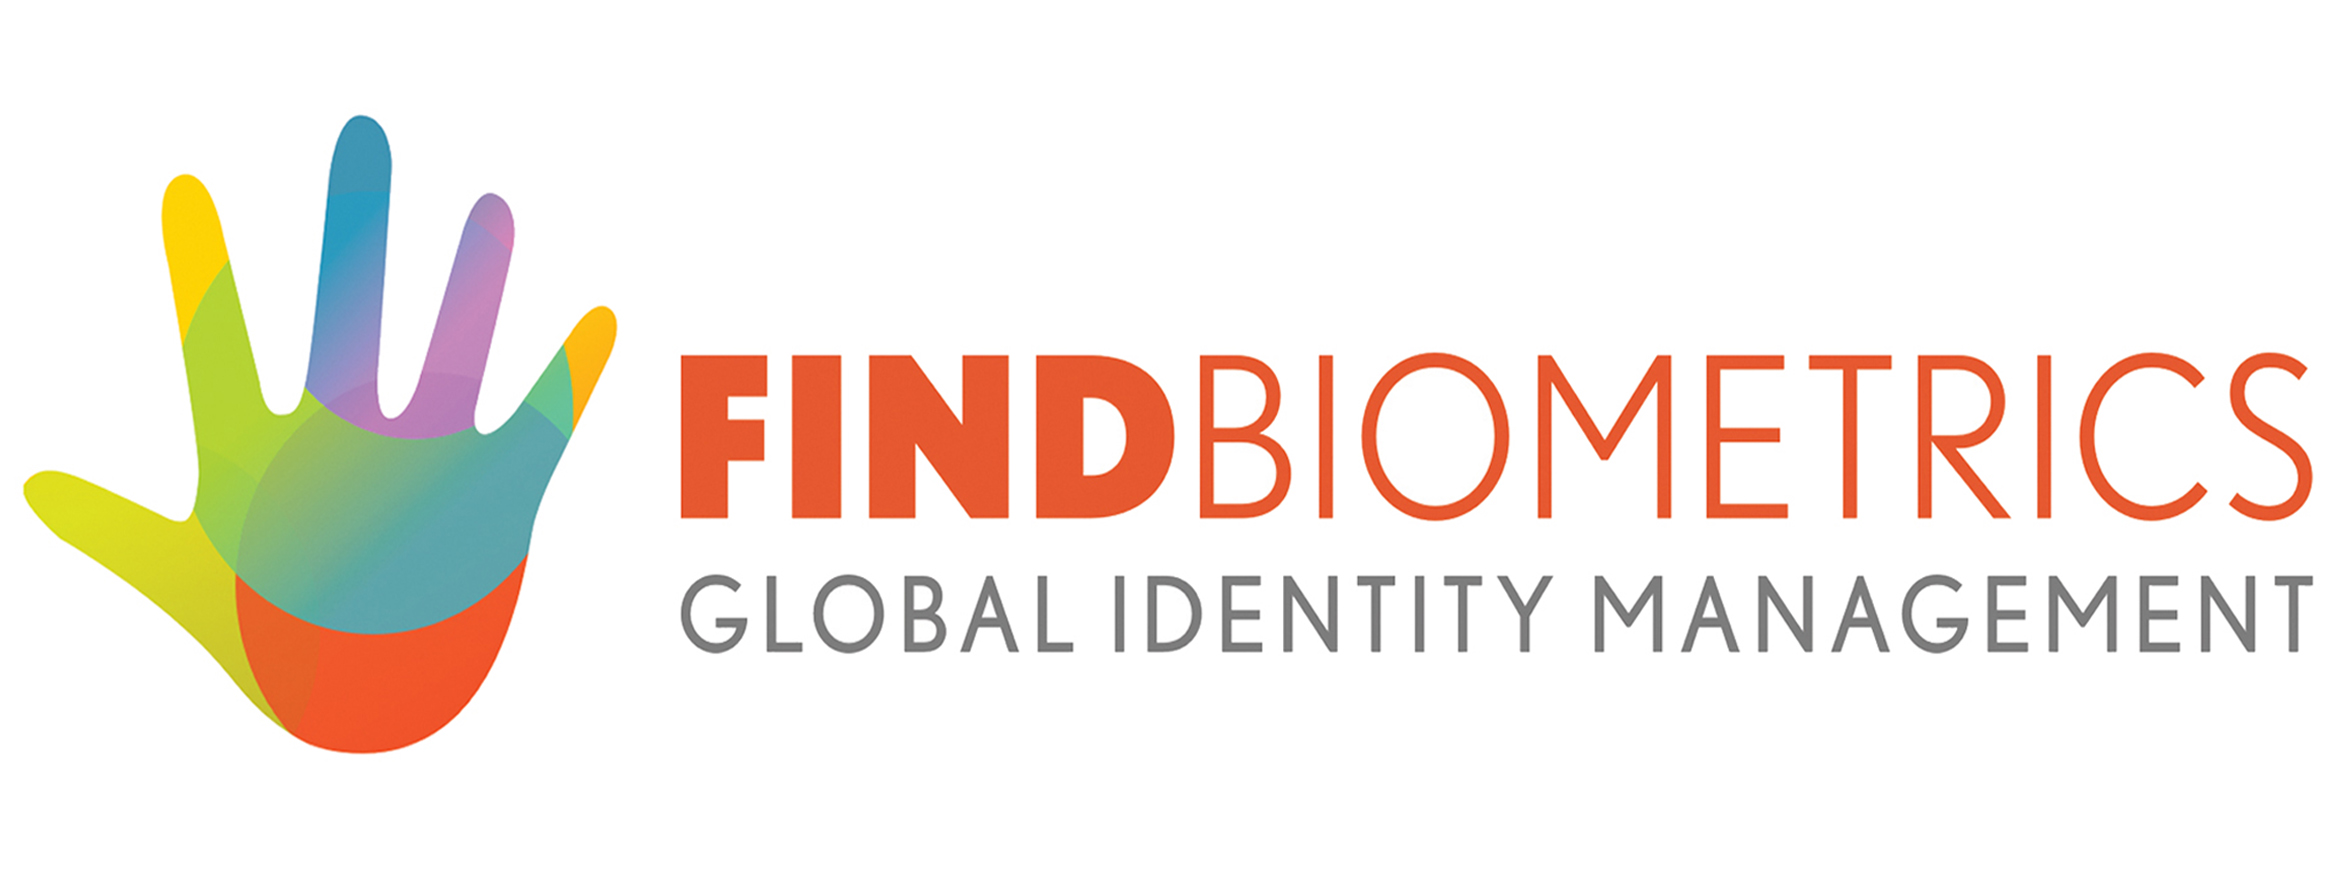 find biometrics logo